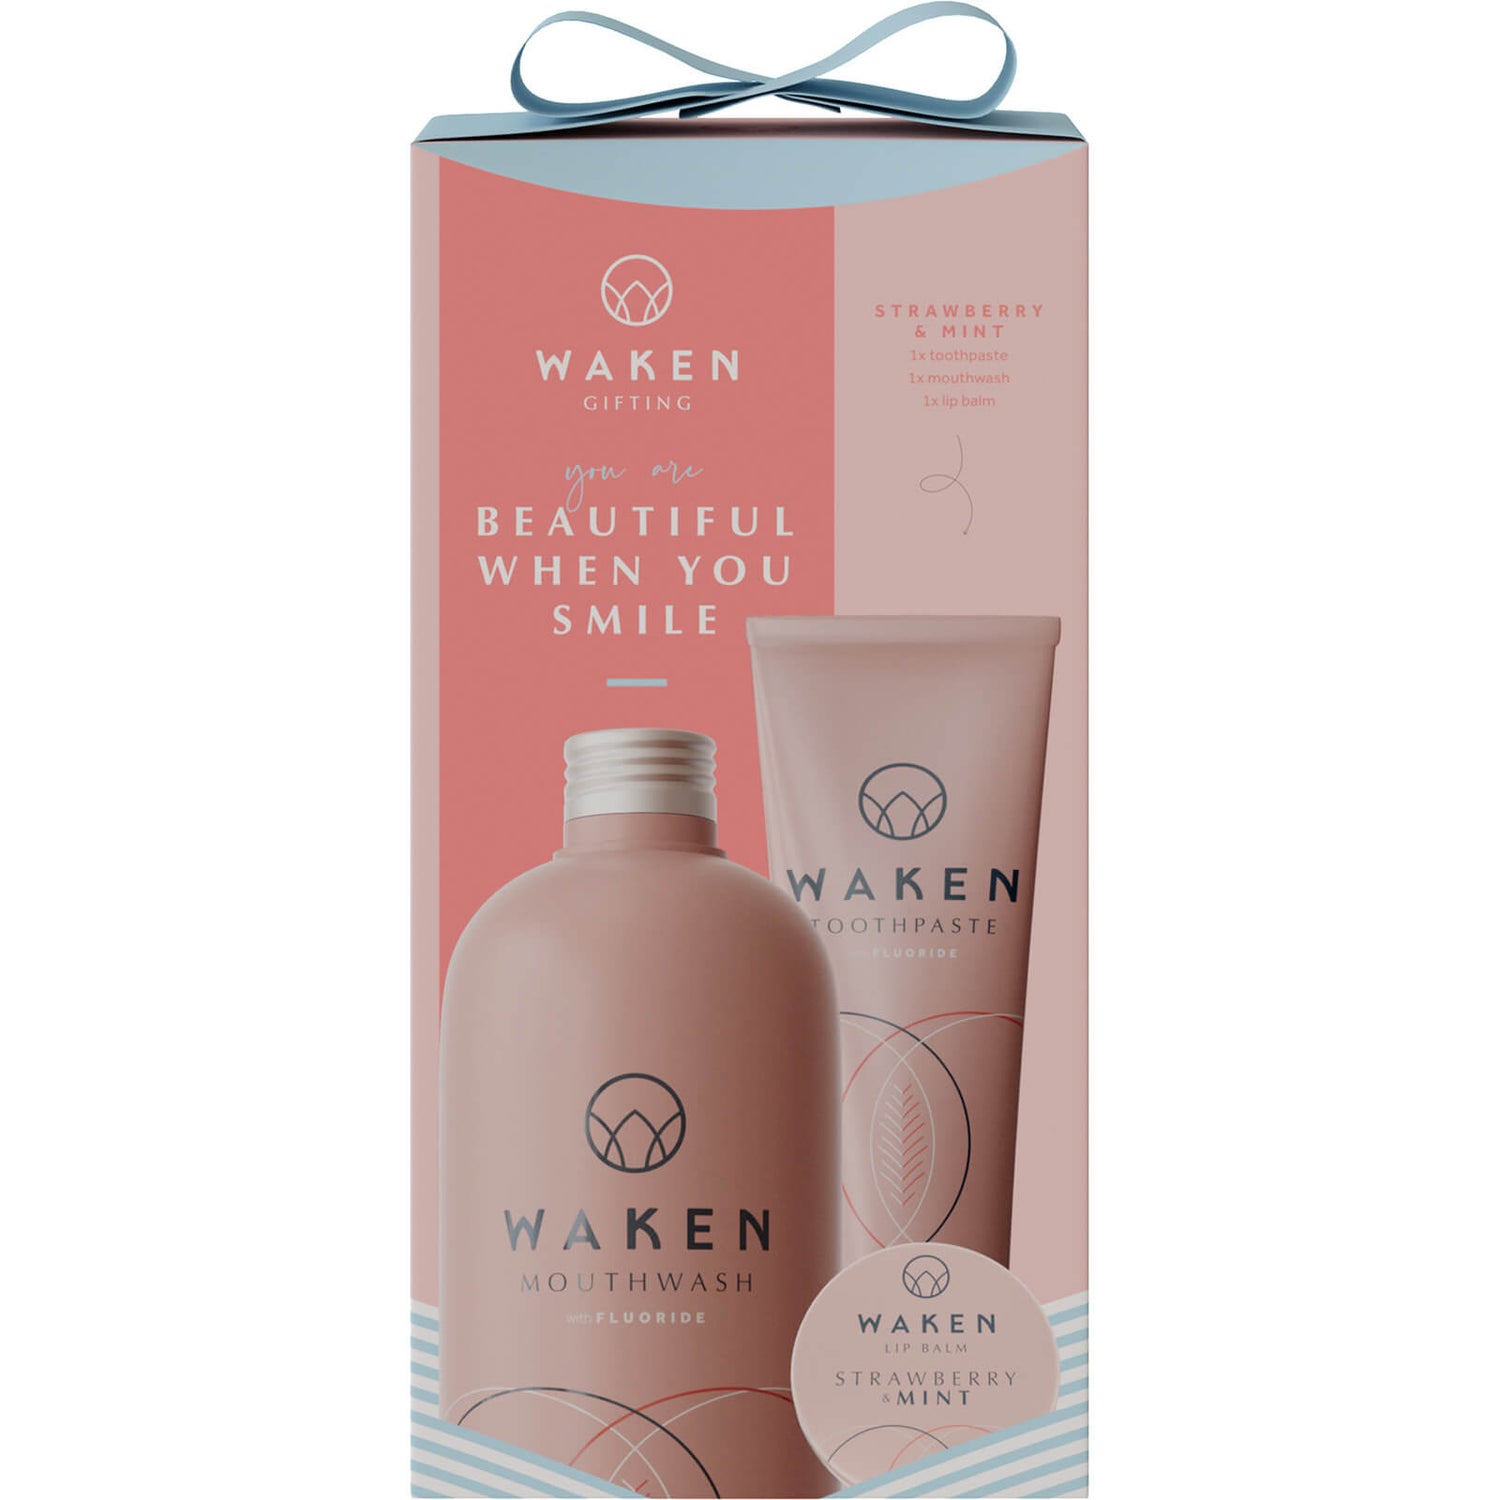 Waken Gift 3 Beautiful When You Smile - Strawberry 850g (Worth £14.50)